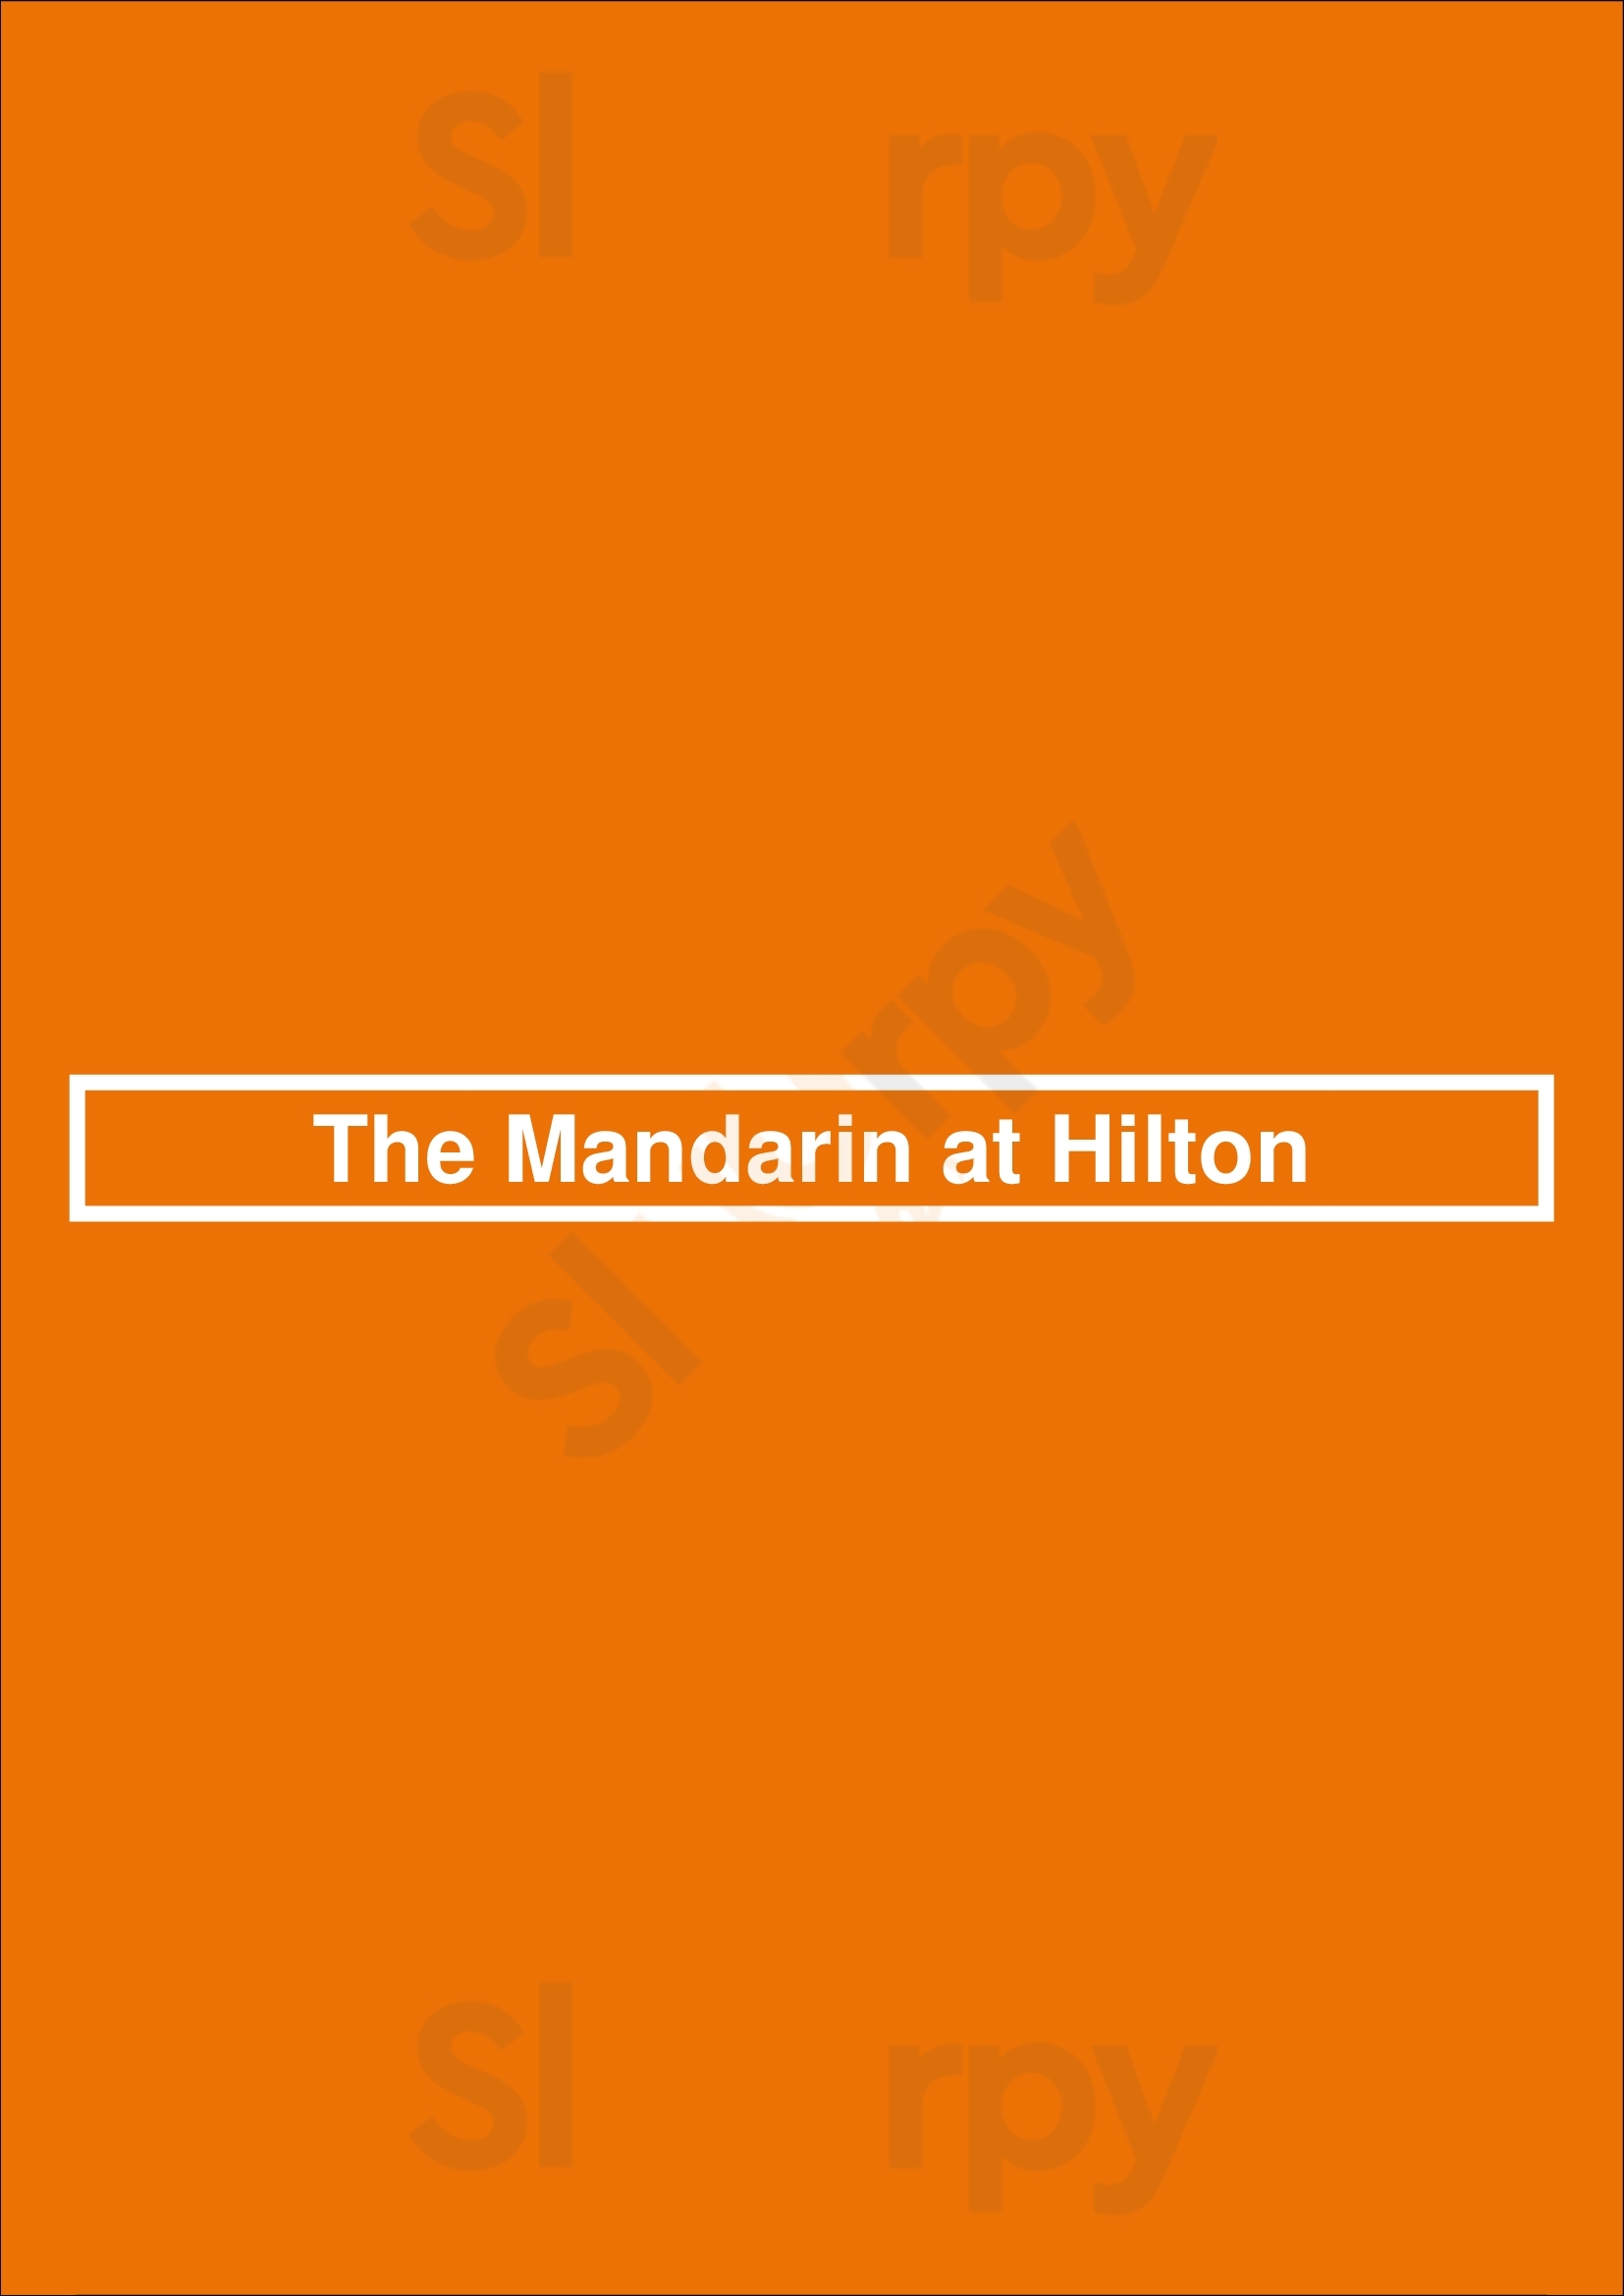 The Mandarin Hilton Menu - 1